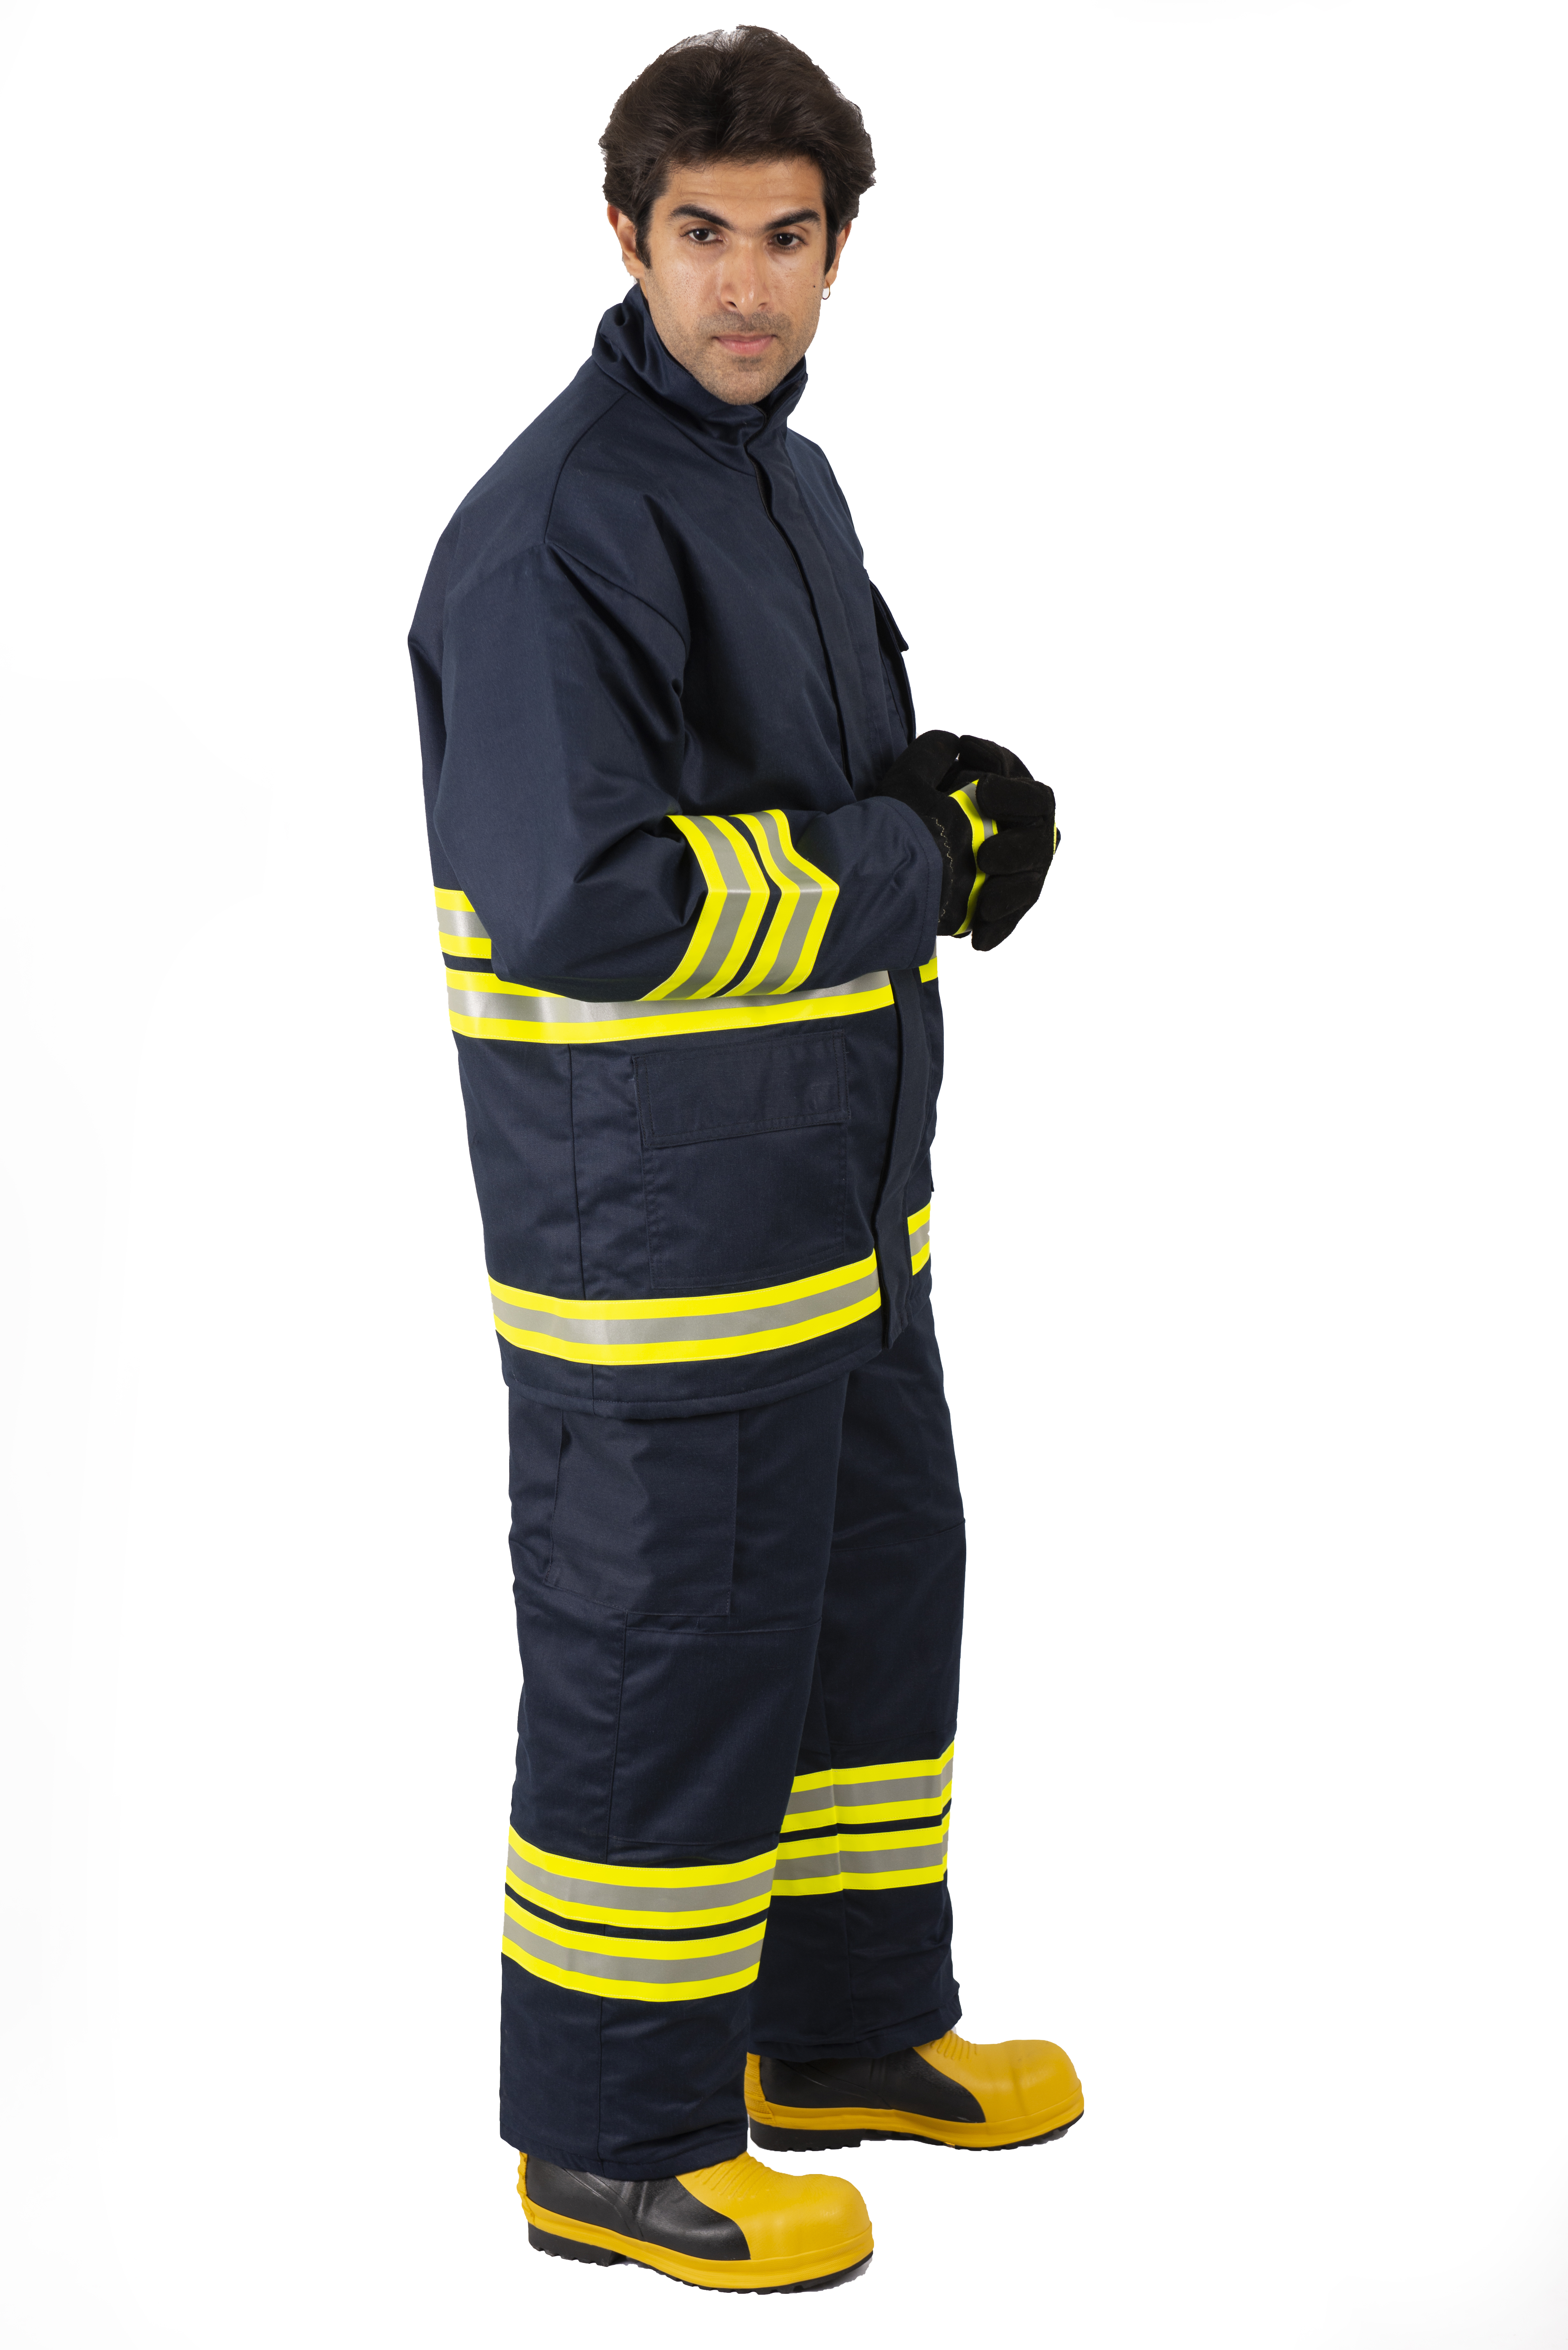 Fire Fighting Suit / Fire Proximity Suit - Protecsafe